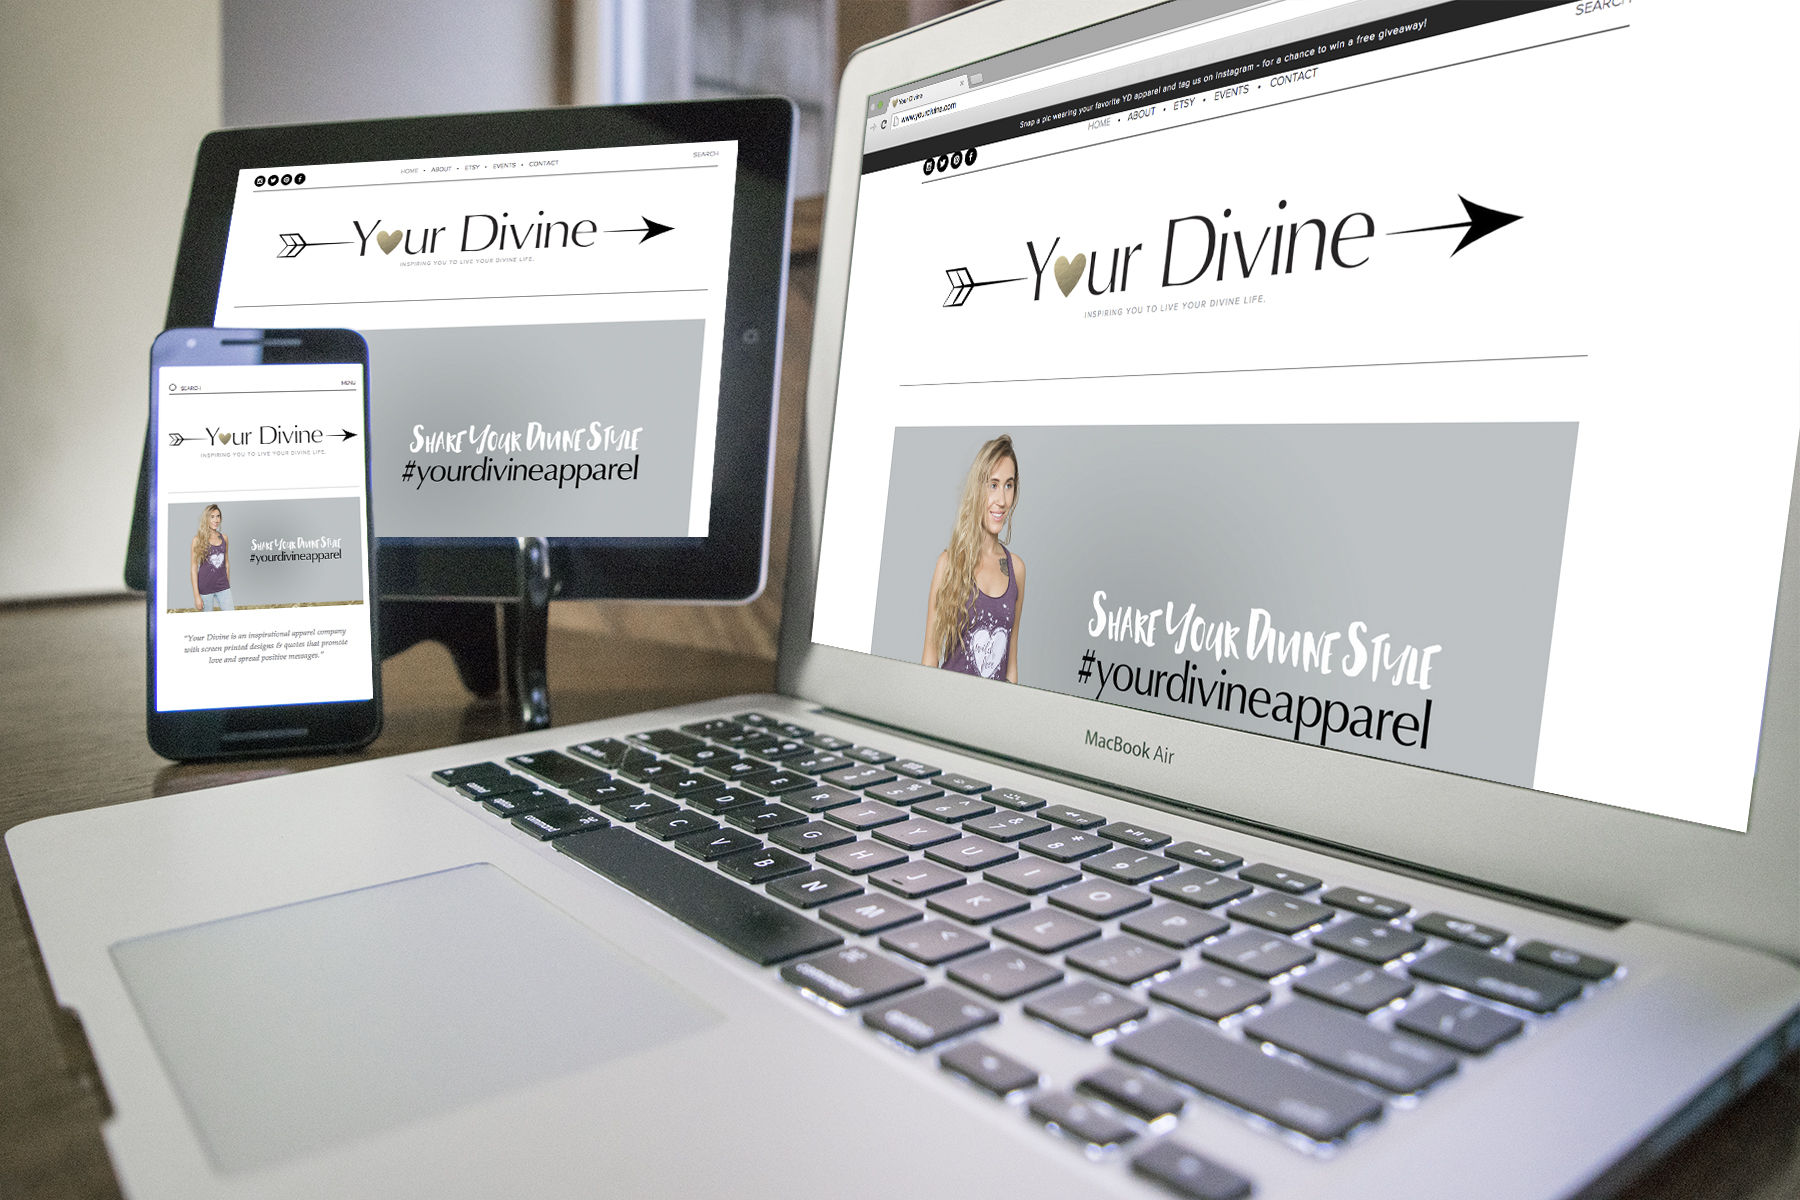 Your Divine Responsive Web Design, Hourglass Studios